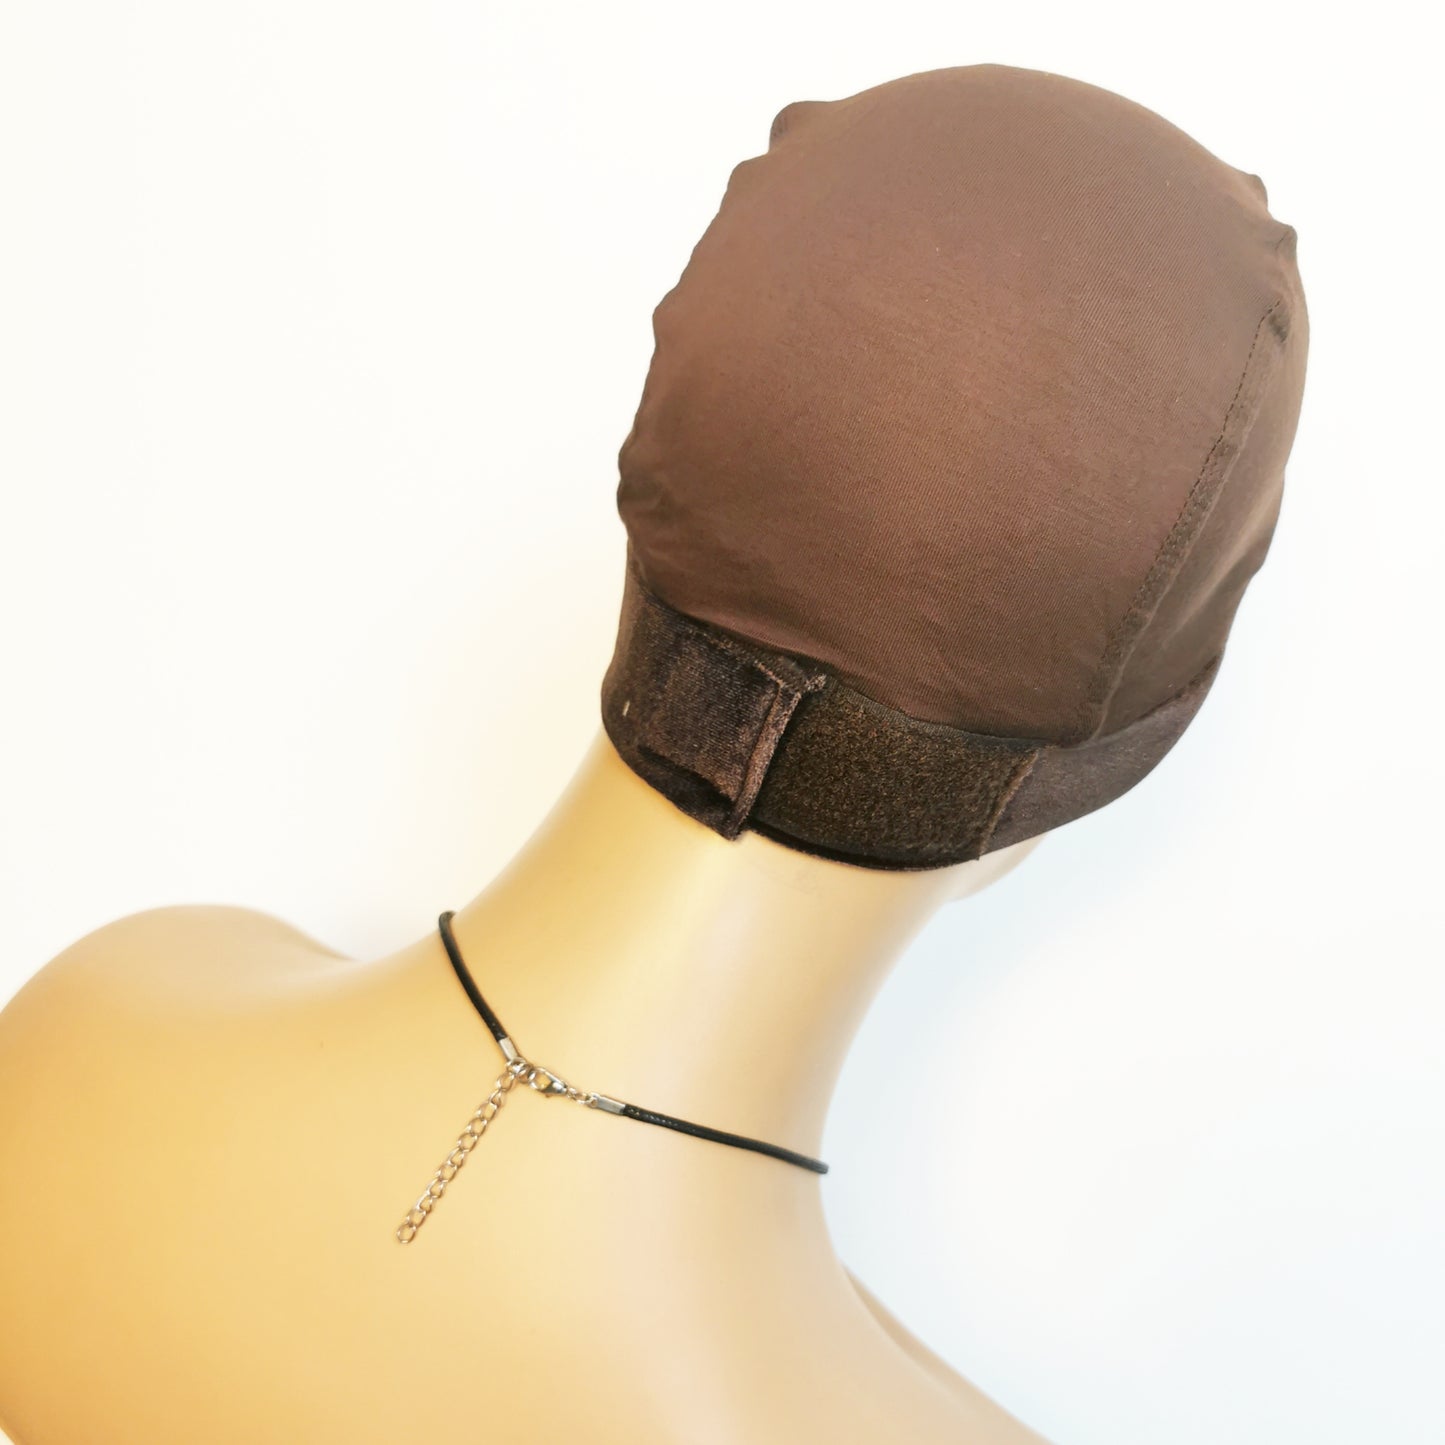 Velvet wig grip with cap